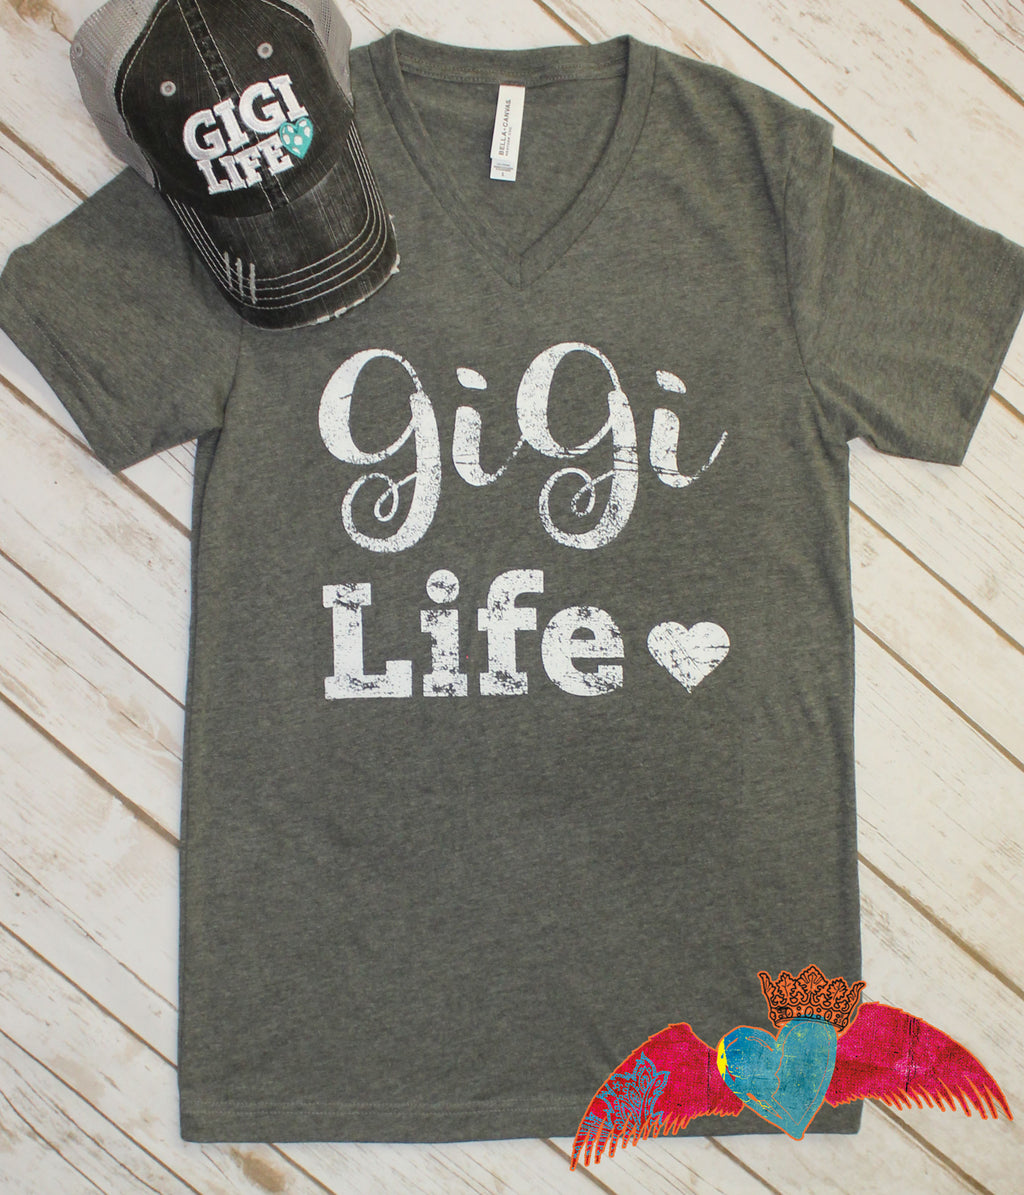 Gigi Life Blessed Box - Bless UR Heart Boutique